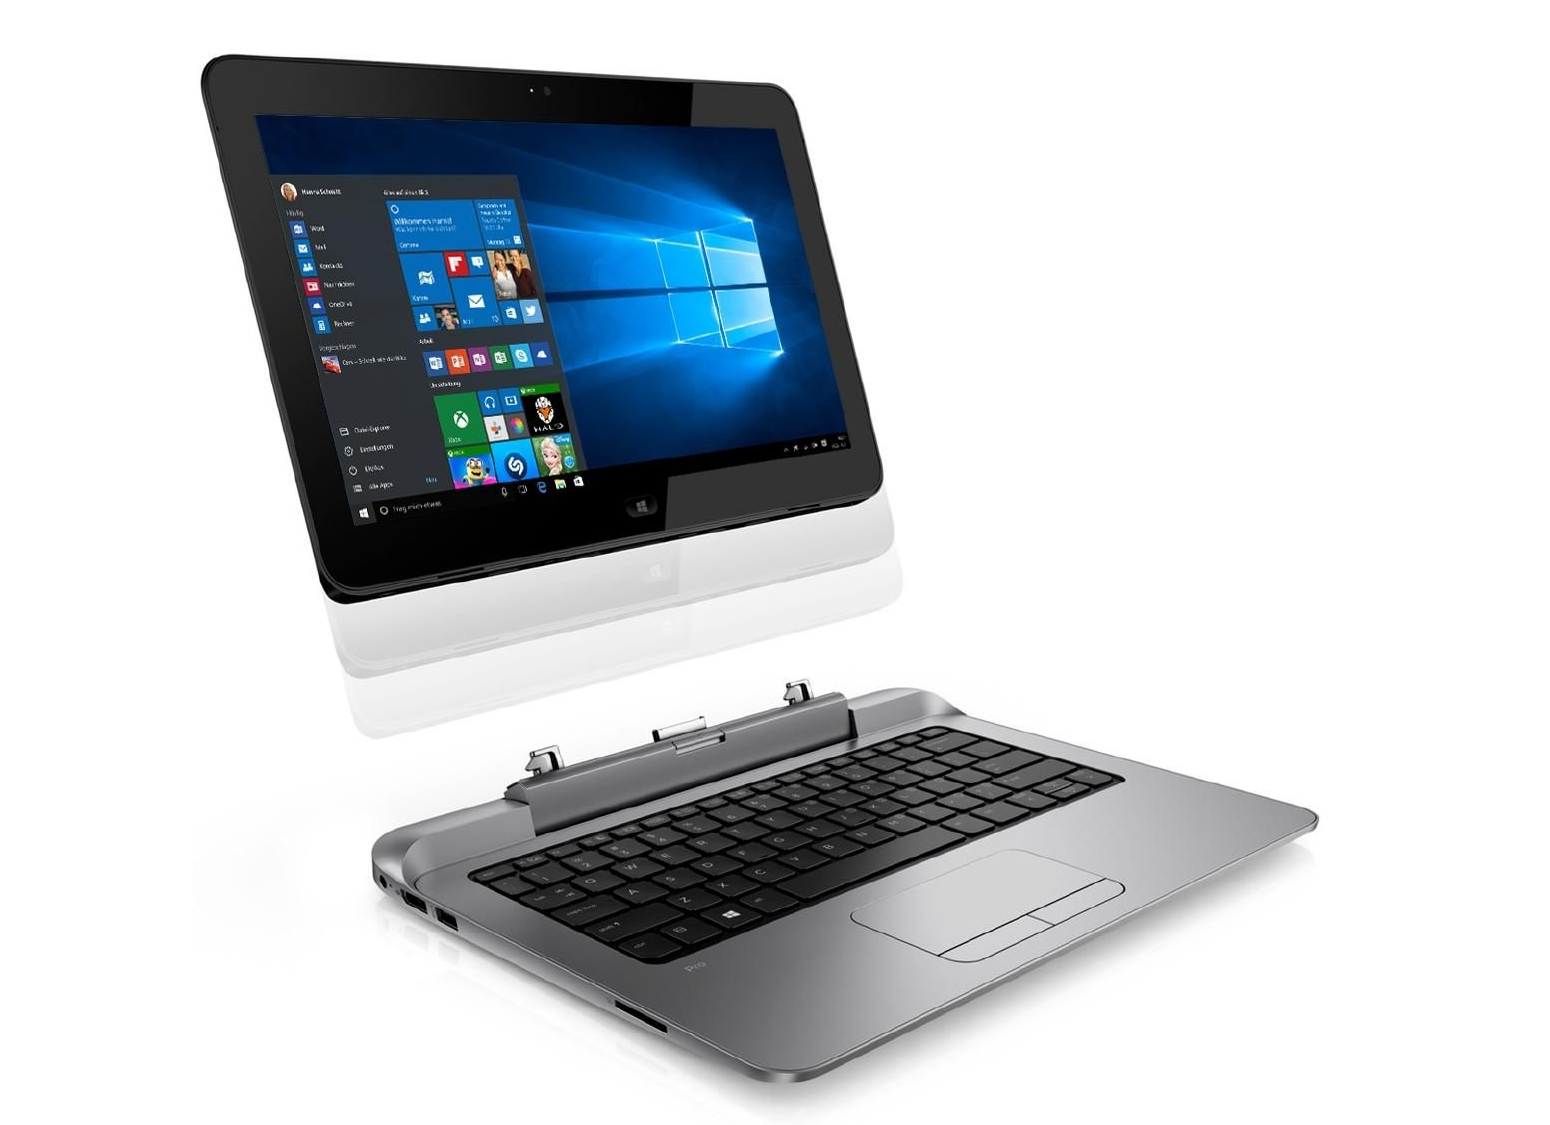 HP Pro x2 612 G1 Convertible Review - NotebookCheck.net Reviews